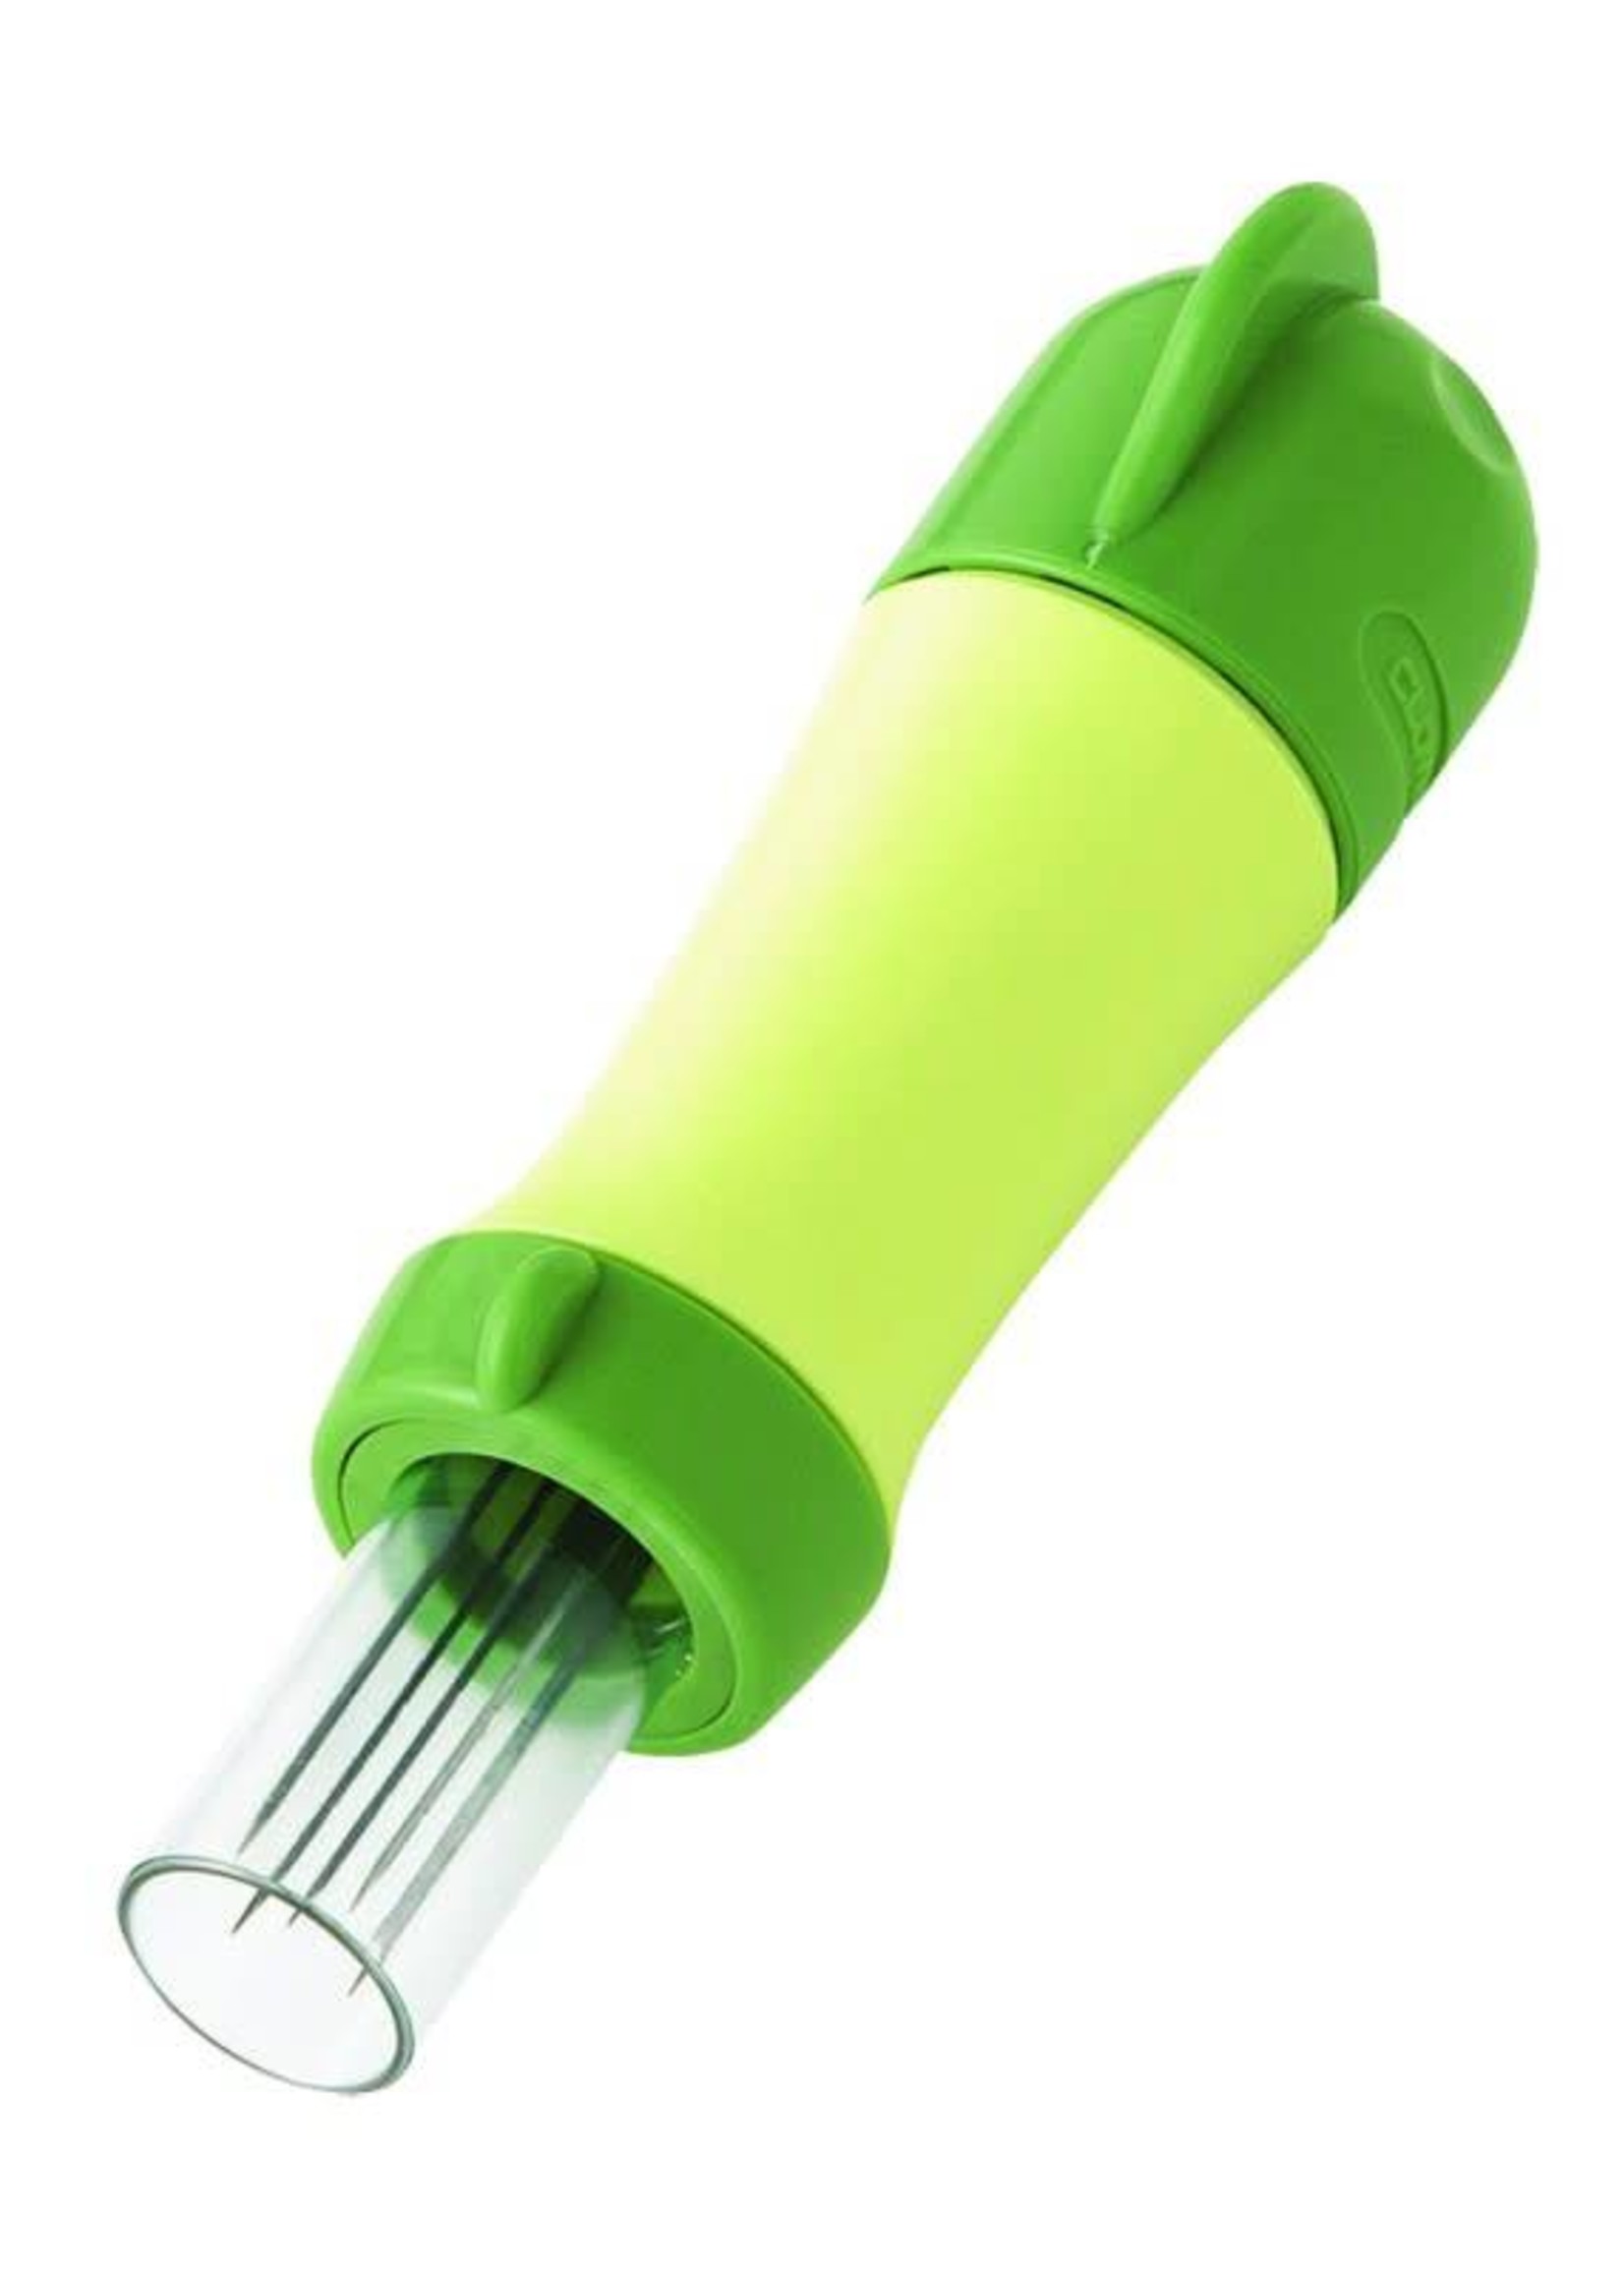 Clover Needle Felting Tool - 5 needles, 40 gauge (fine) needles included